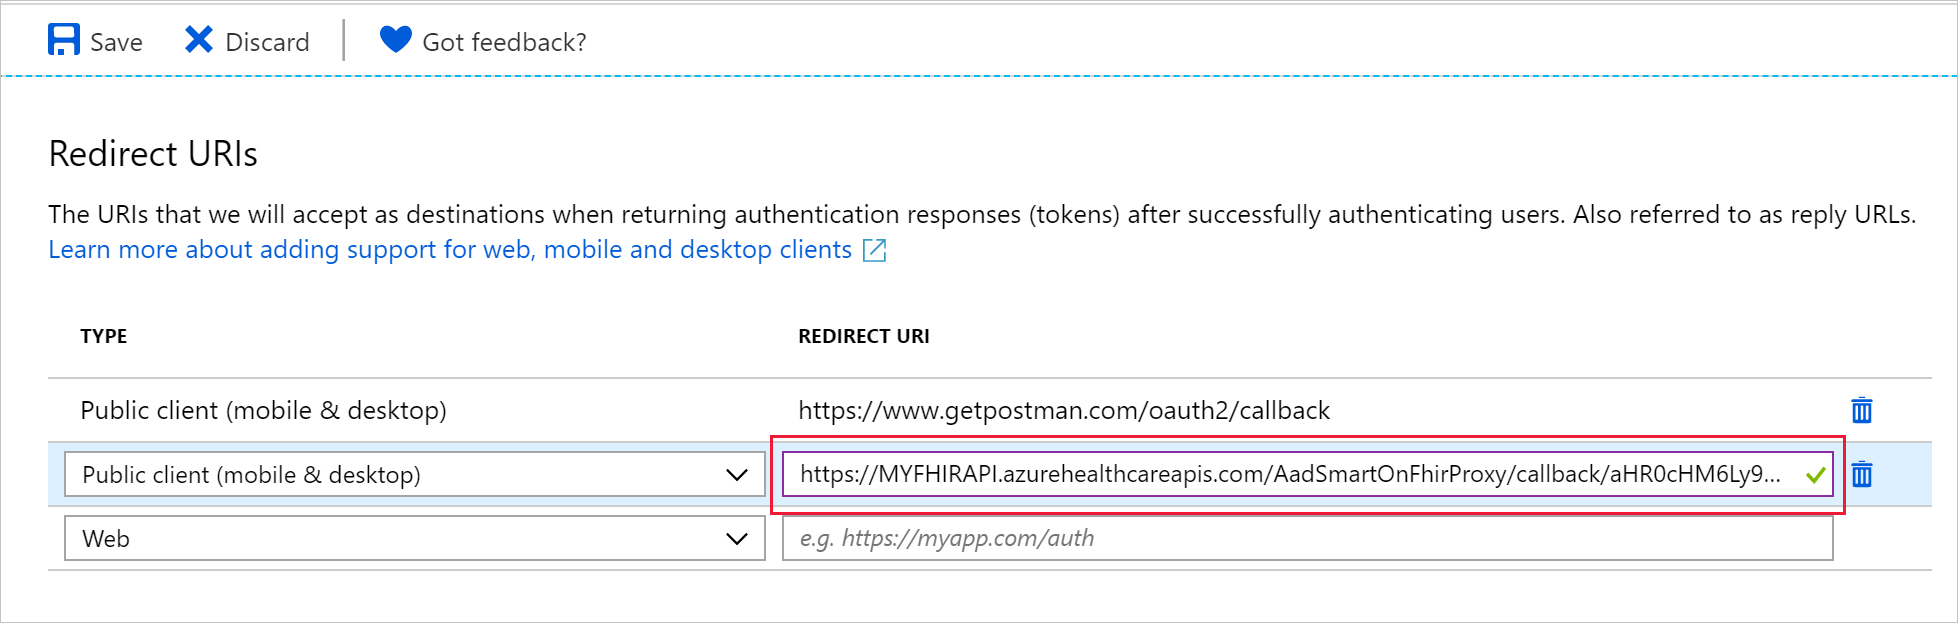 Captura de tela que mostra como a URL de resposta pode ser configurada para o cliente público.